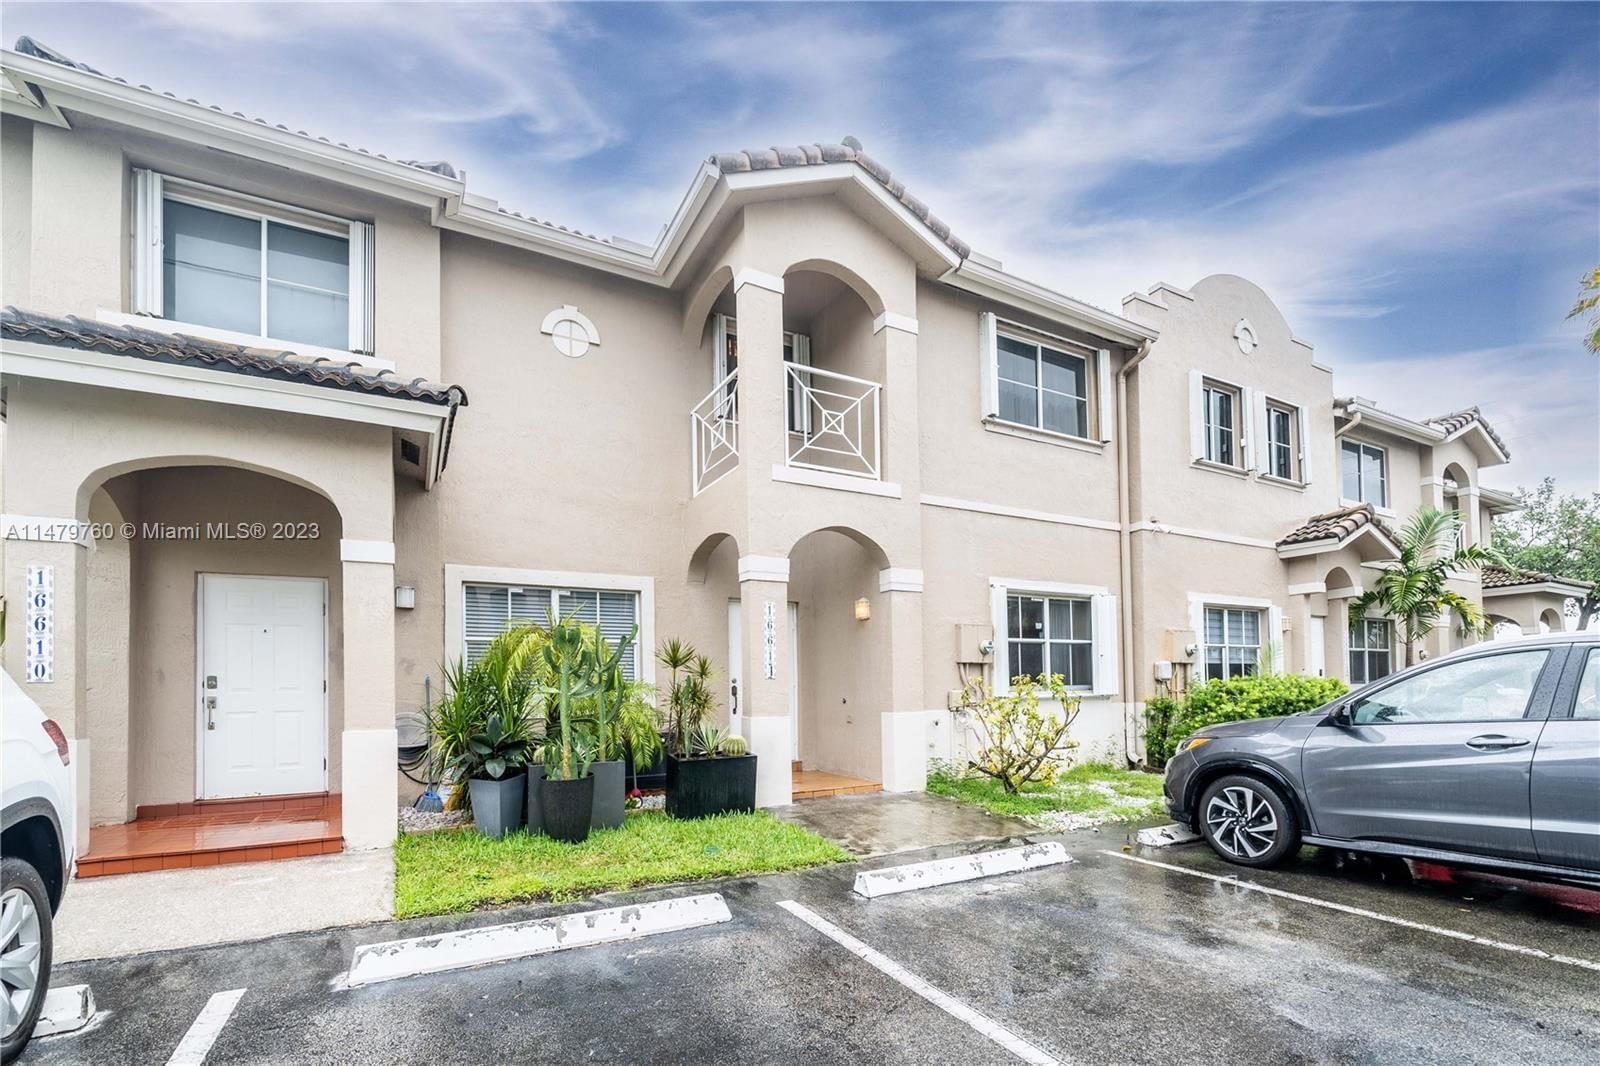 Real estate property located at 16614 71st Ave, Miami-Dade County, PASEOS AT MIAMI LAKES, Miami Lakes, FL